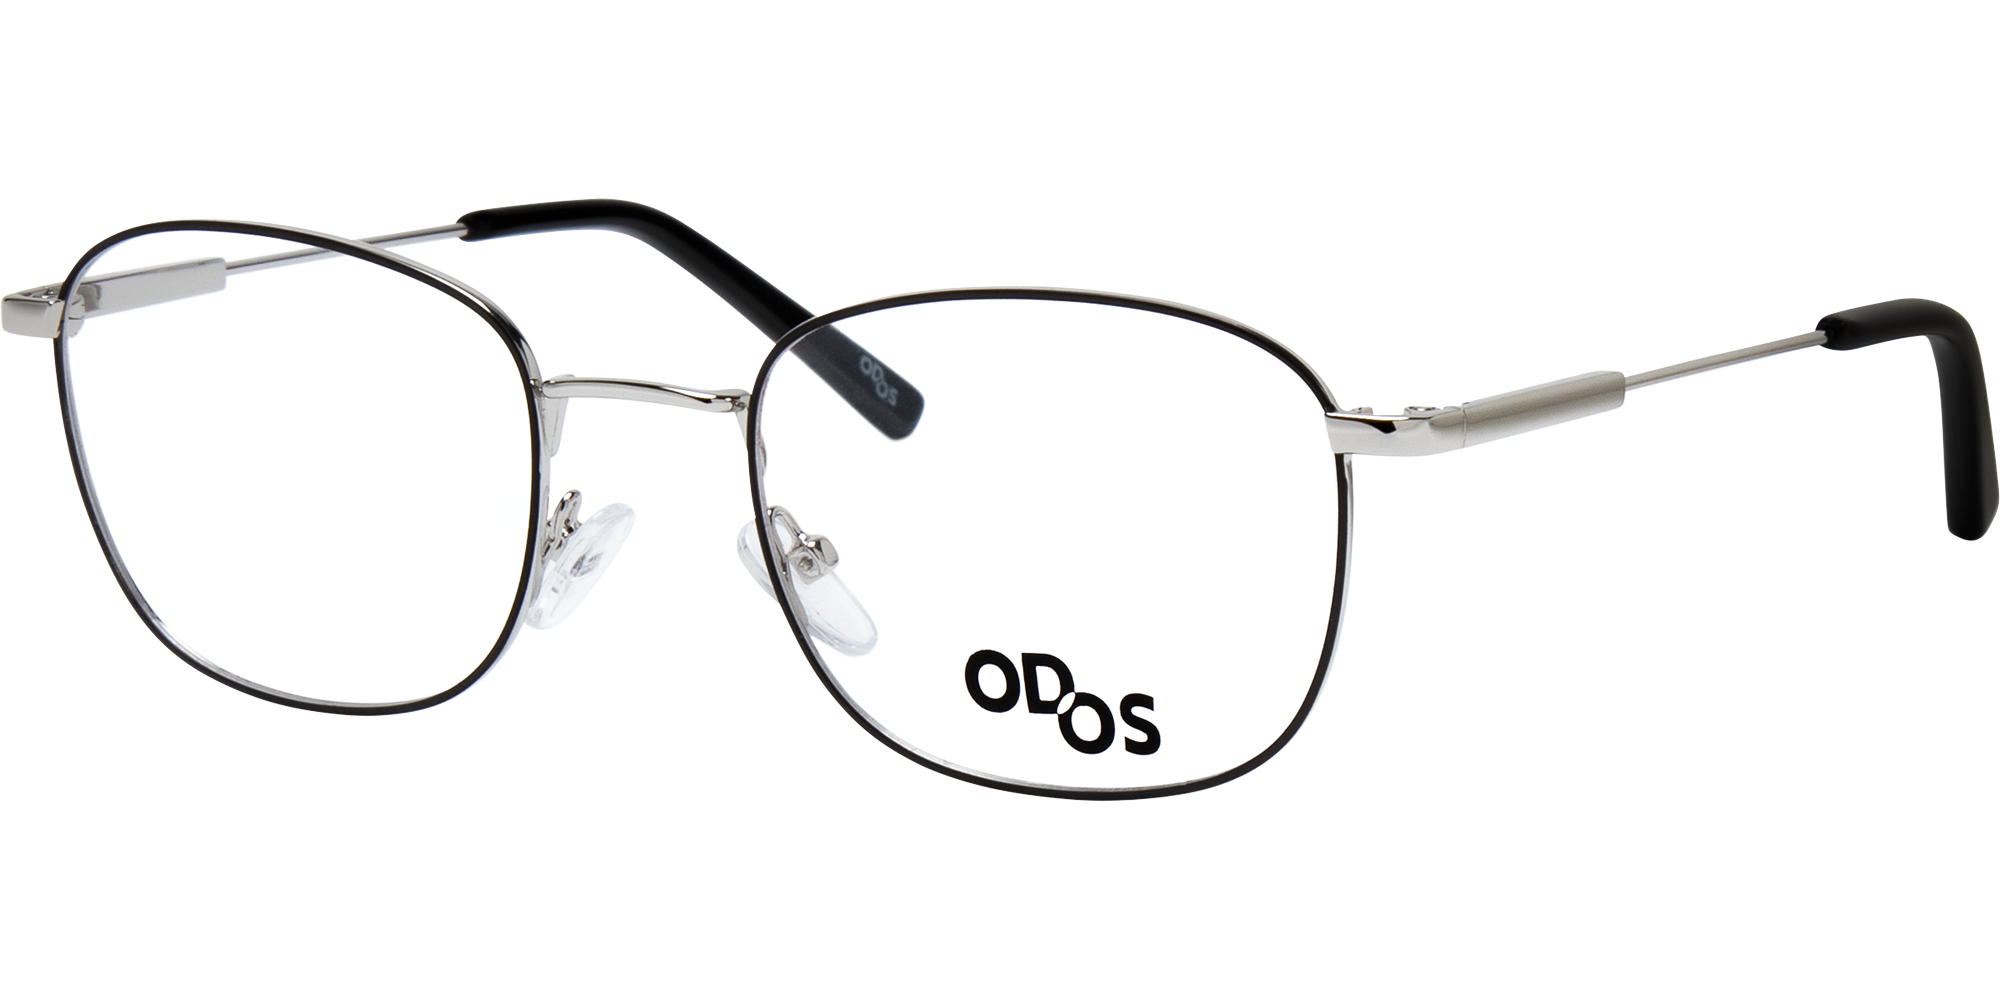 OD/OS Pegasus image number null